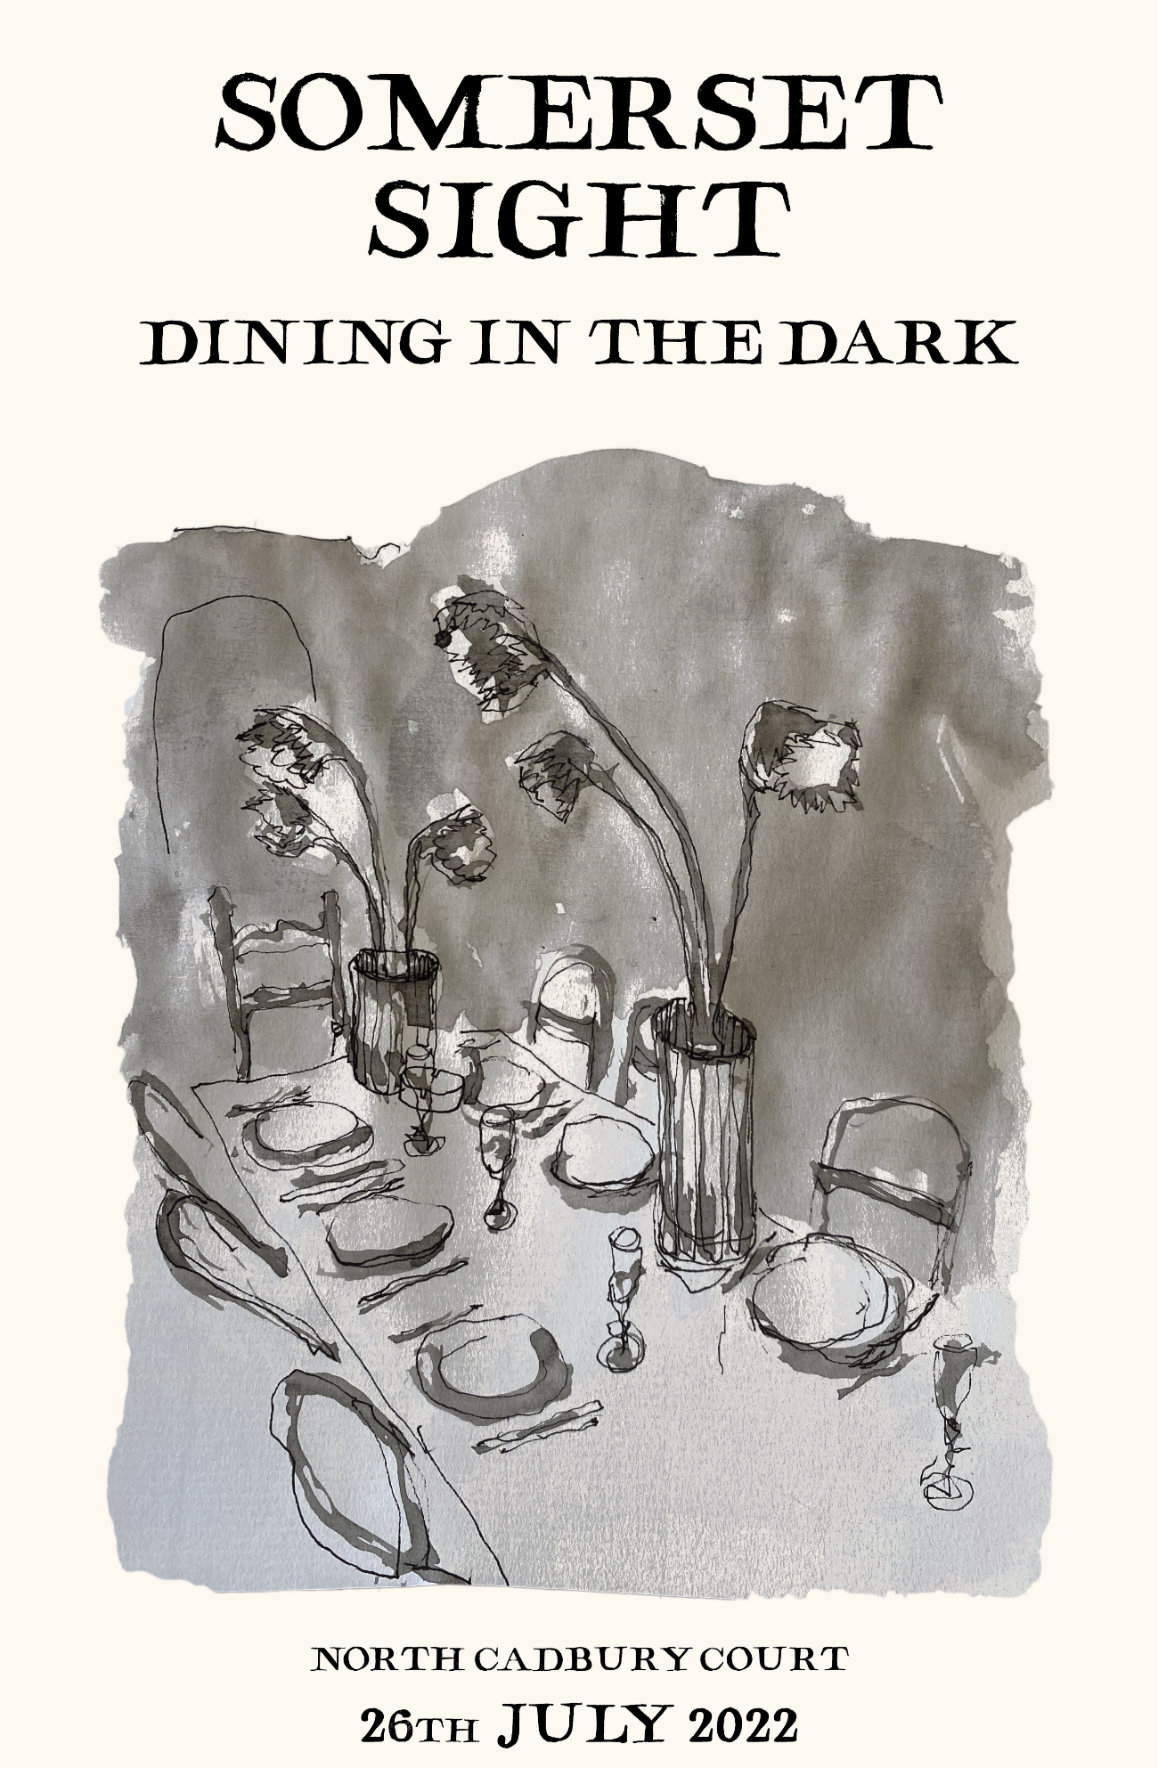 Somerset Sight Dining in the dark, fundraising event